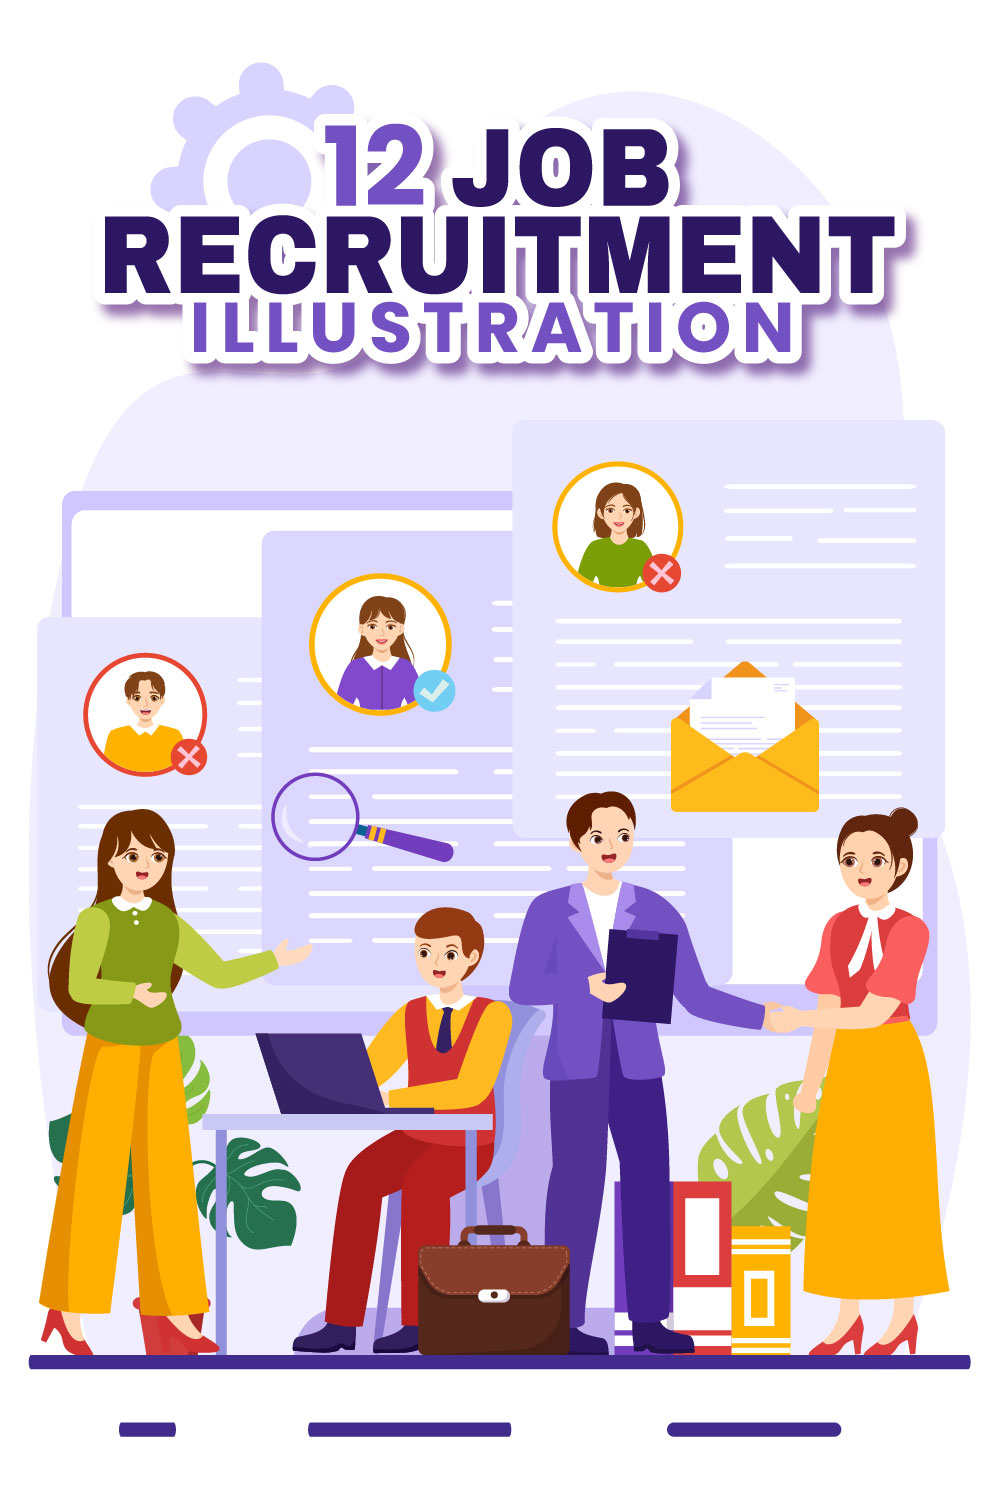 12 Job Recruitment Illustration pinterest preview image.